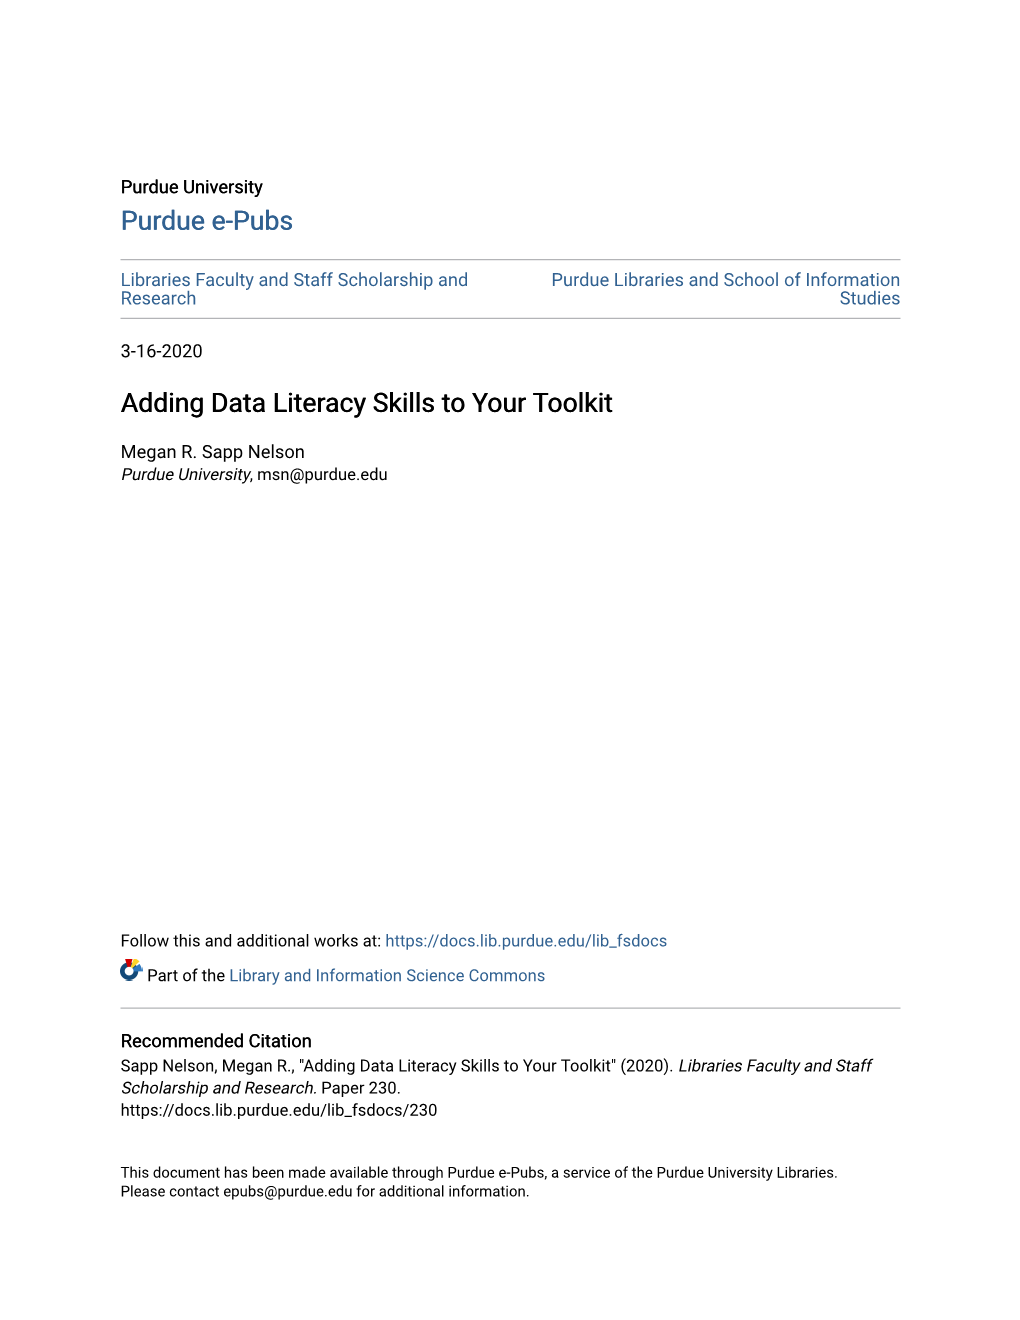 Adding Data Literacy Skills to Your Toolkit